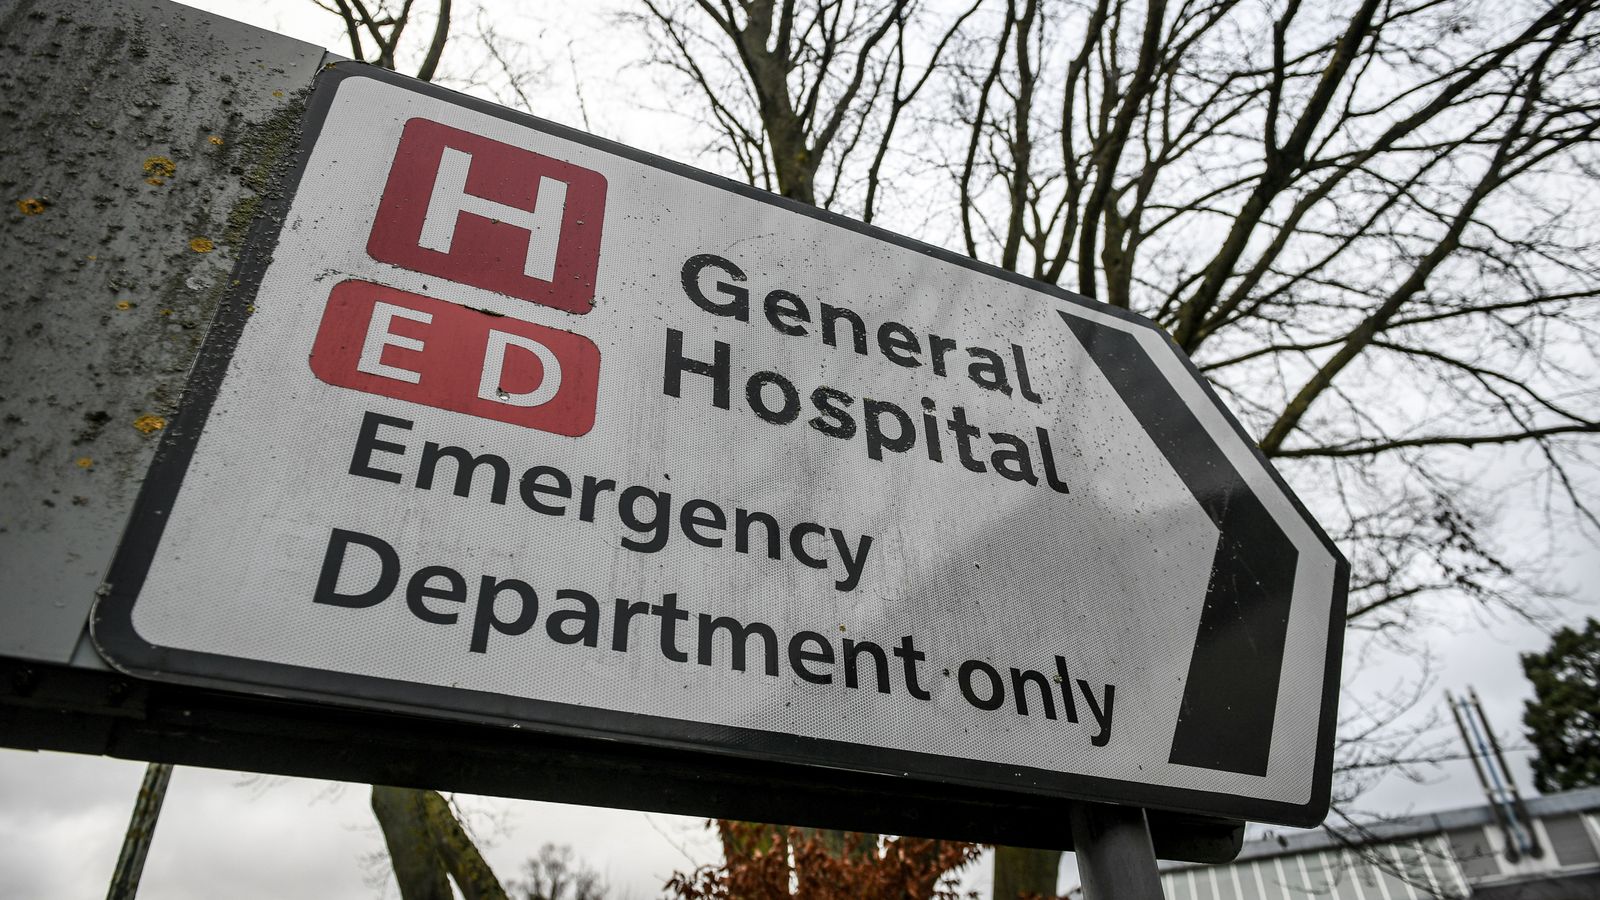 Boris Johnson's 40 new hospitals pledge faces investigation by spending watchdog